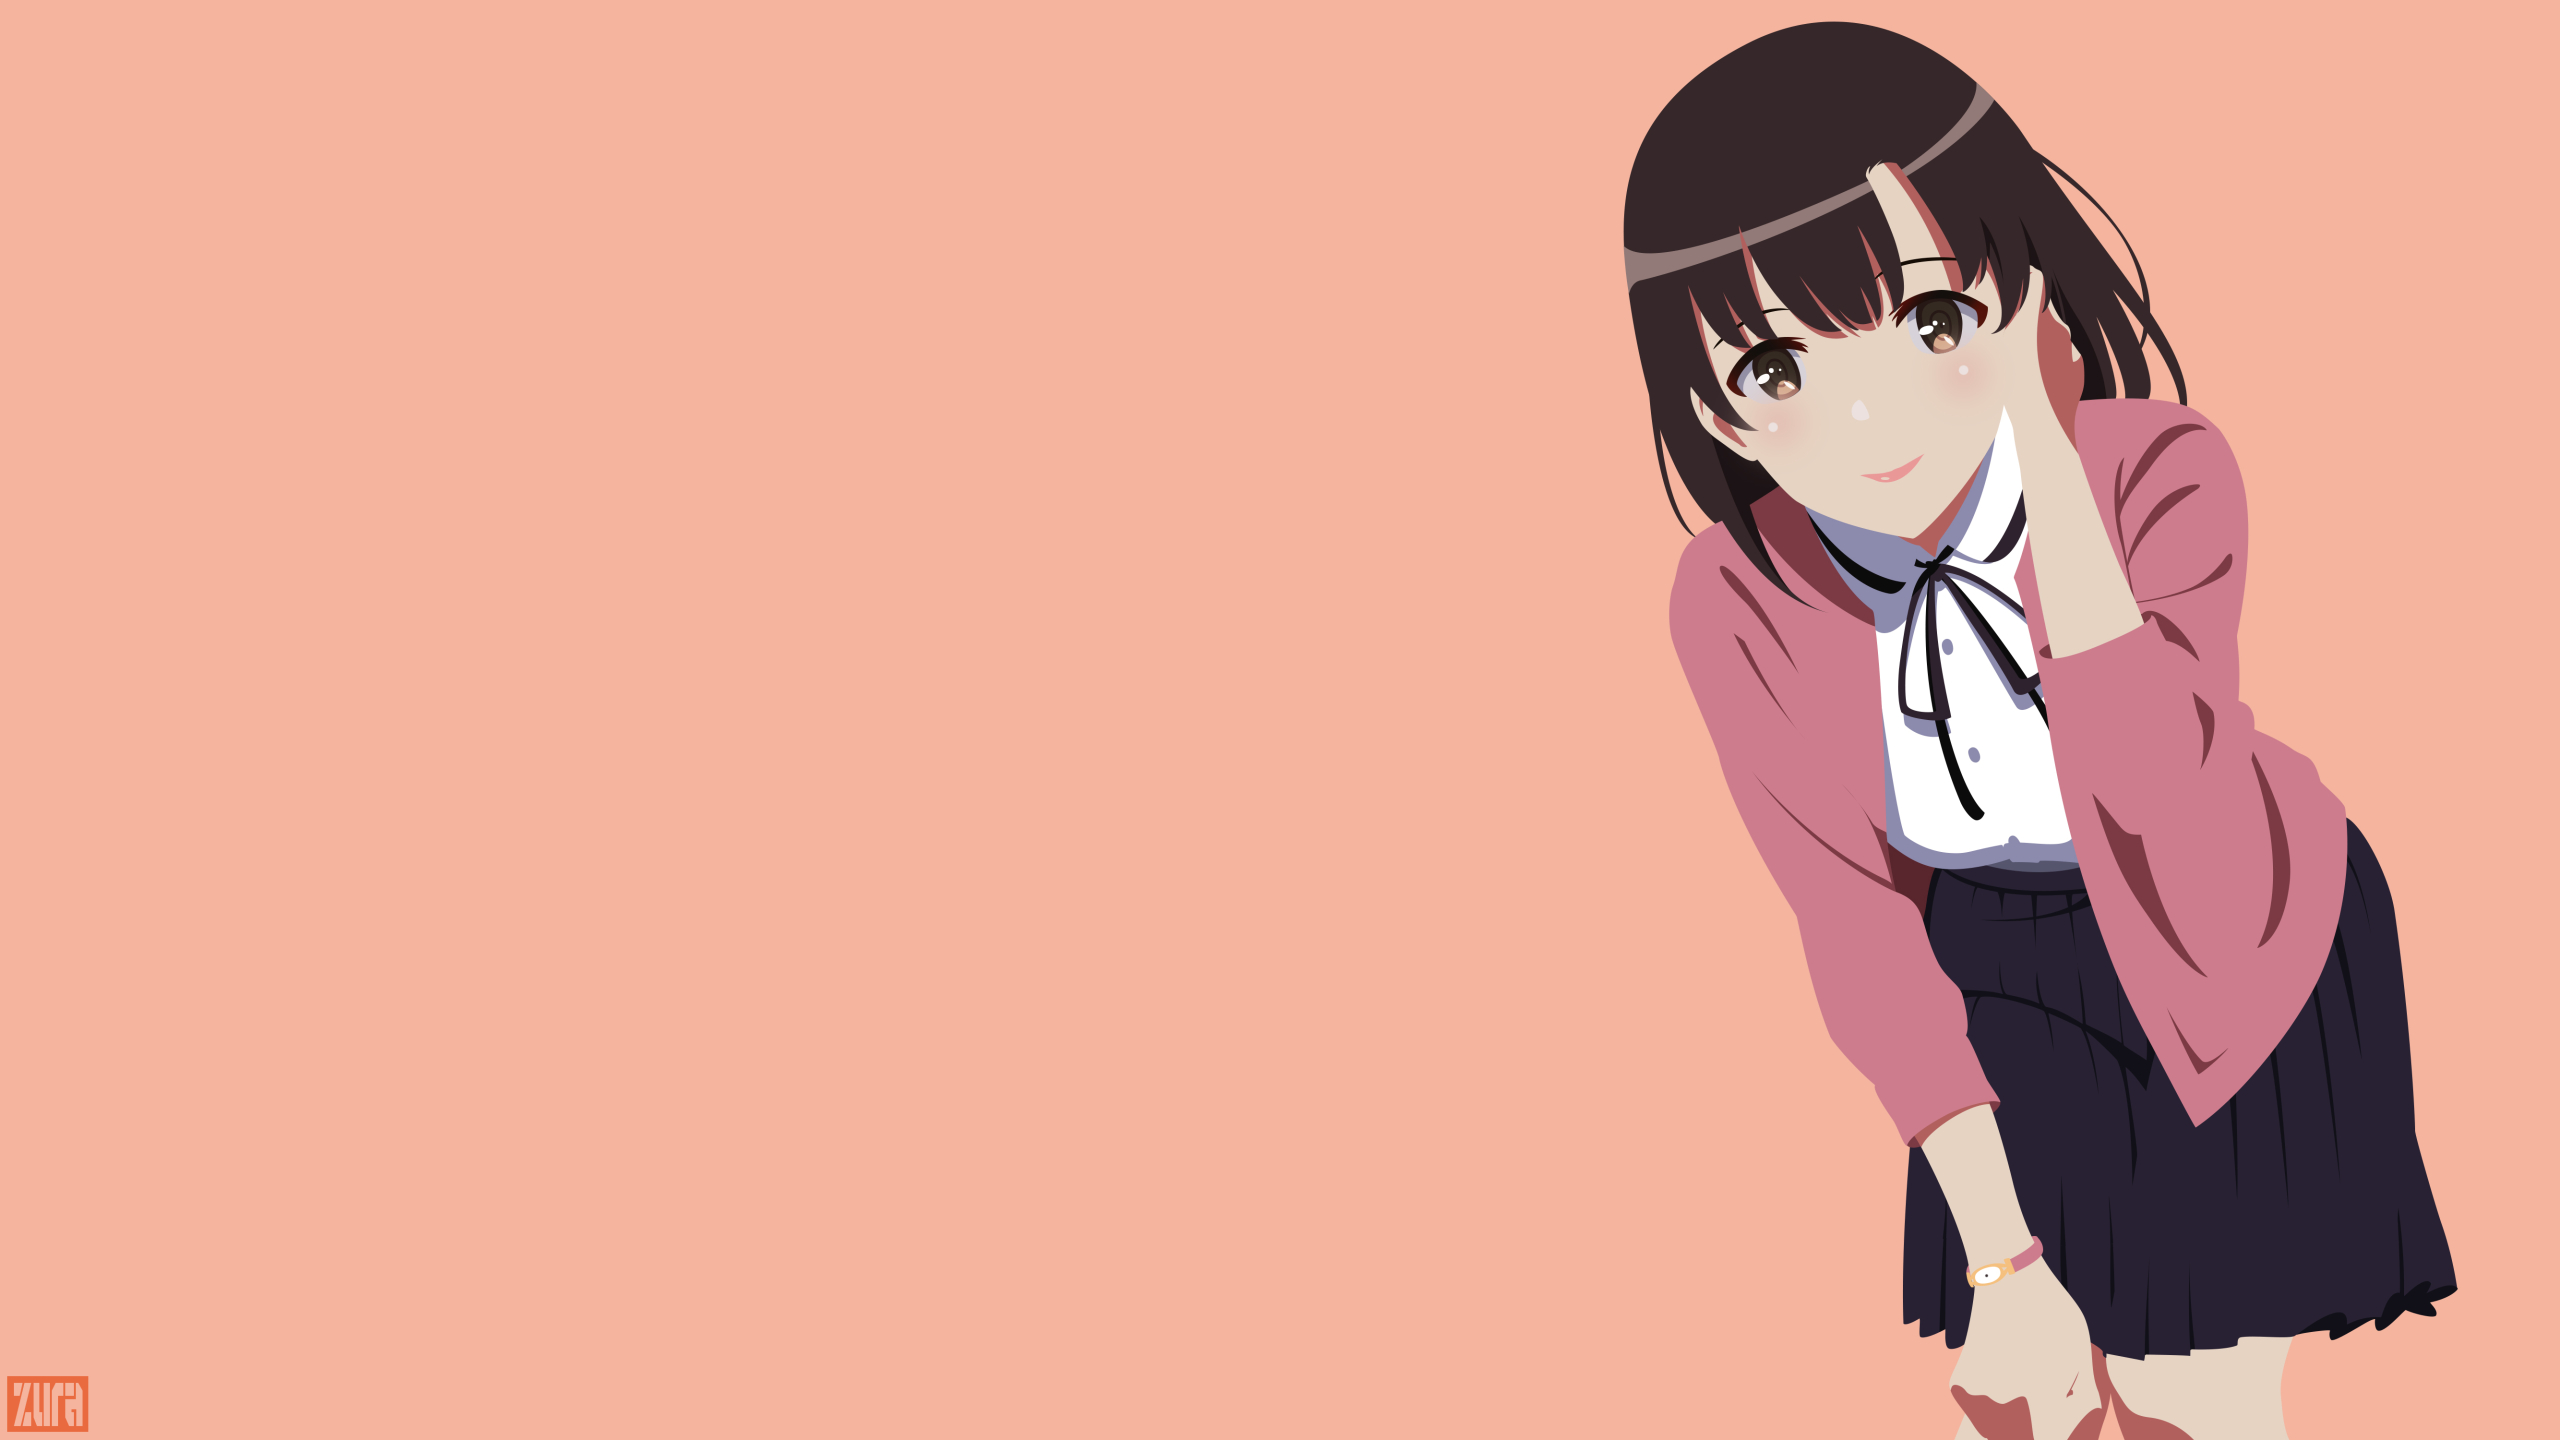 2560x1440 Megumi Kato 4k 1440p Resolution Wallpaper Hd Anime 4k Images, Photos, Reviews